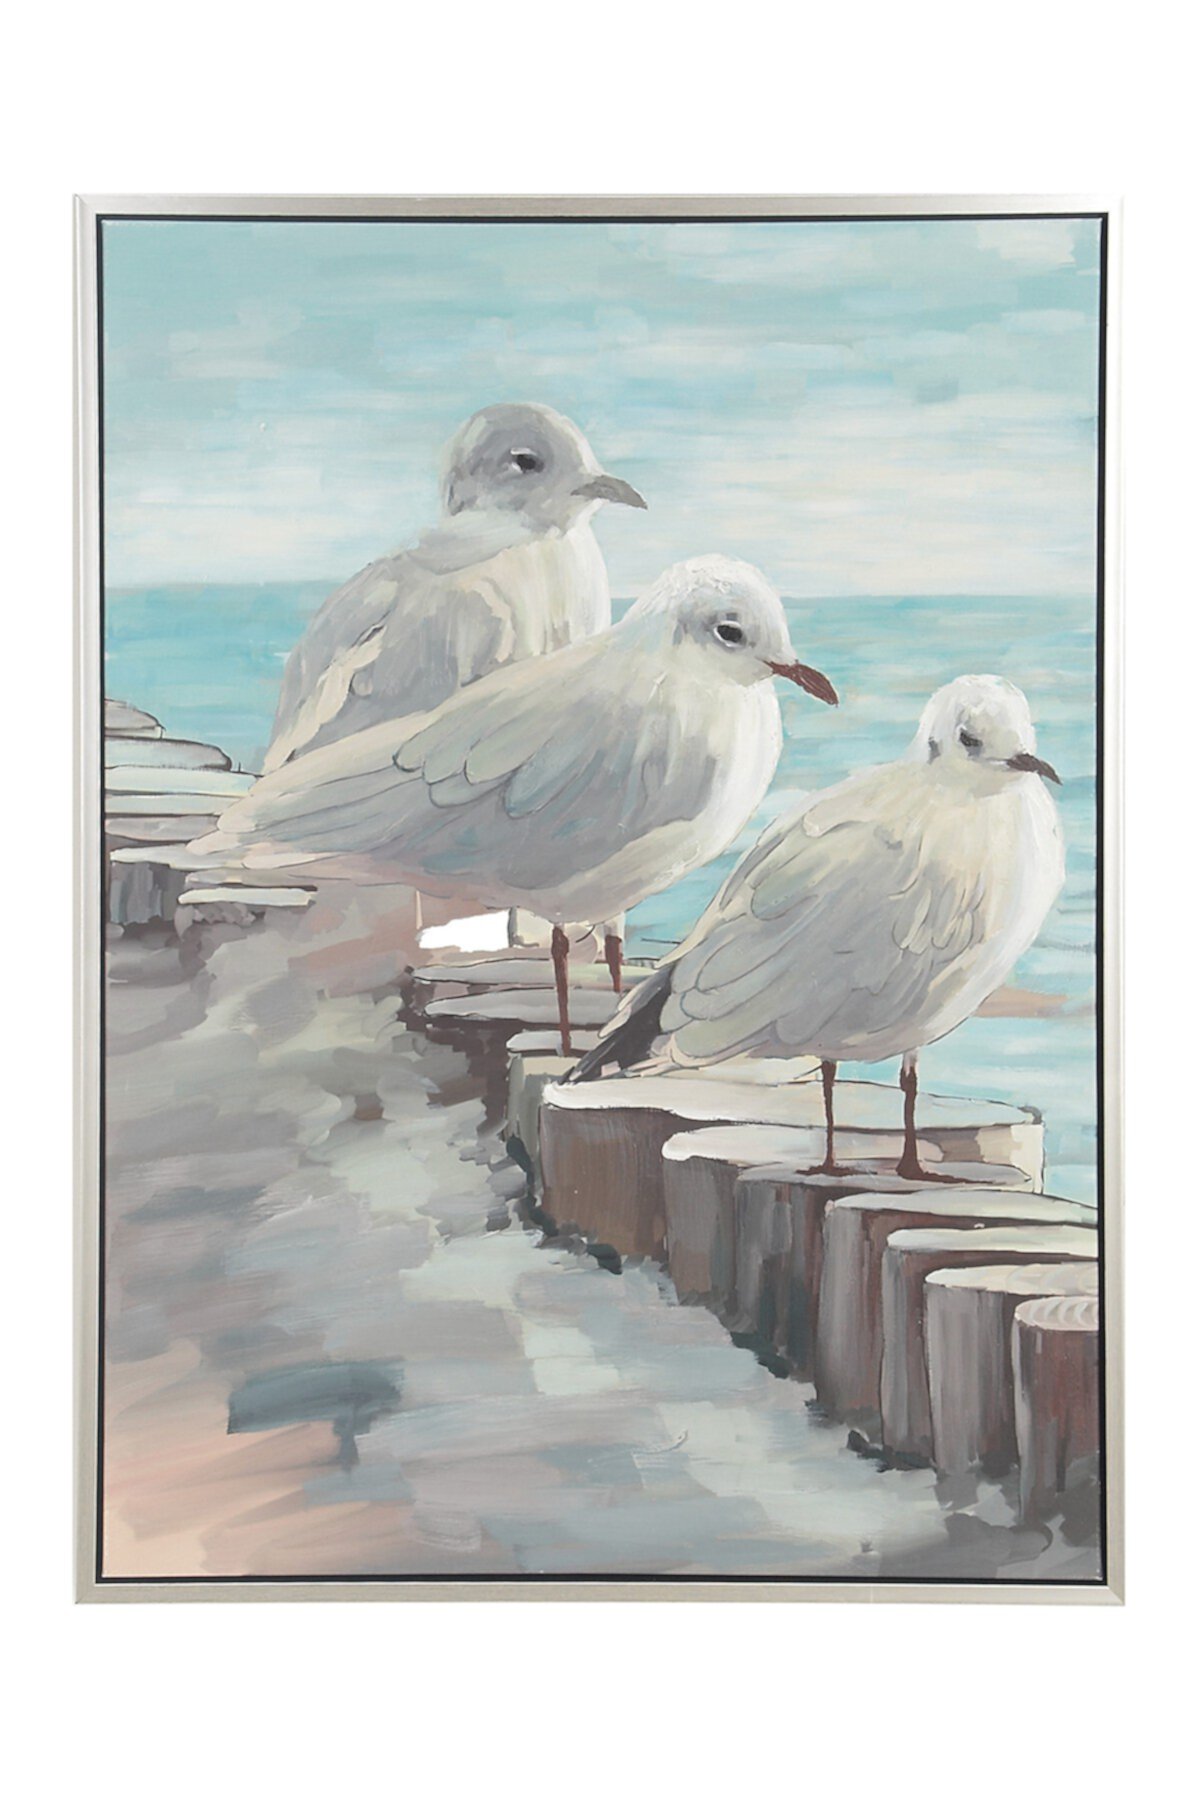 Современная картина с птицами, сидящими на бревнах, 47 "x 36", оформлена в деревянной раме. Willow Row